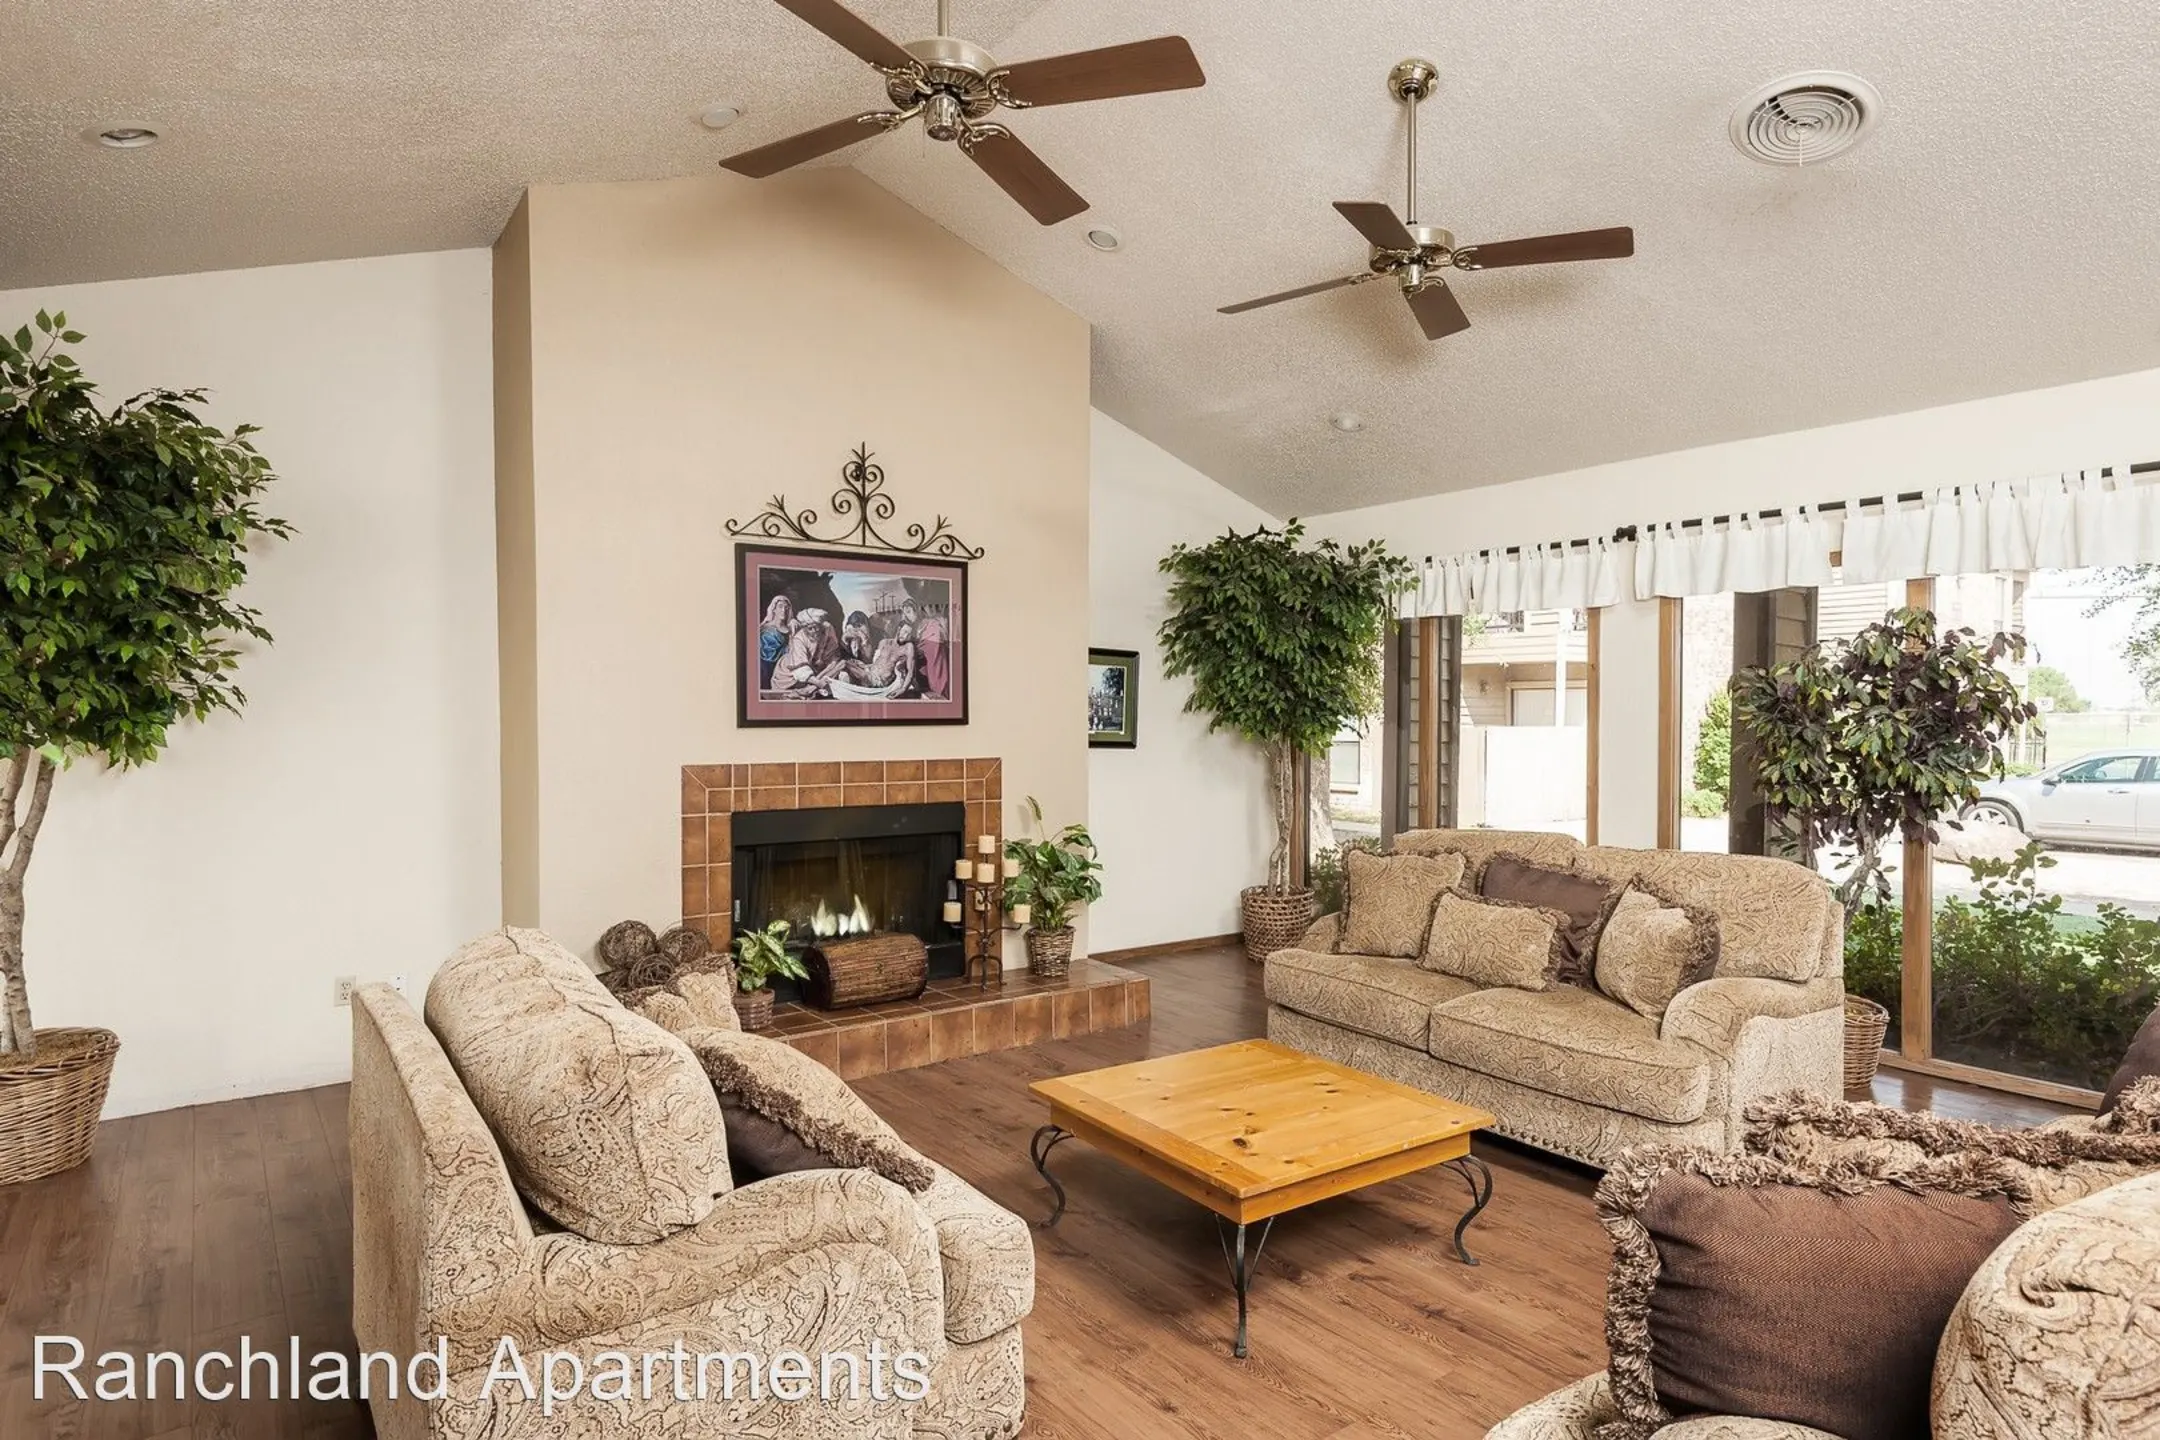 Living Room - Ranchland Apartments - Midland, TX